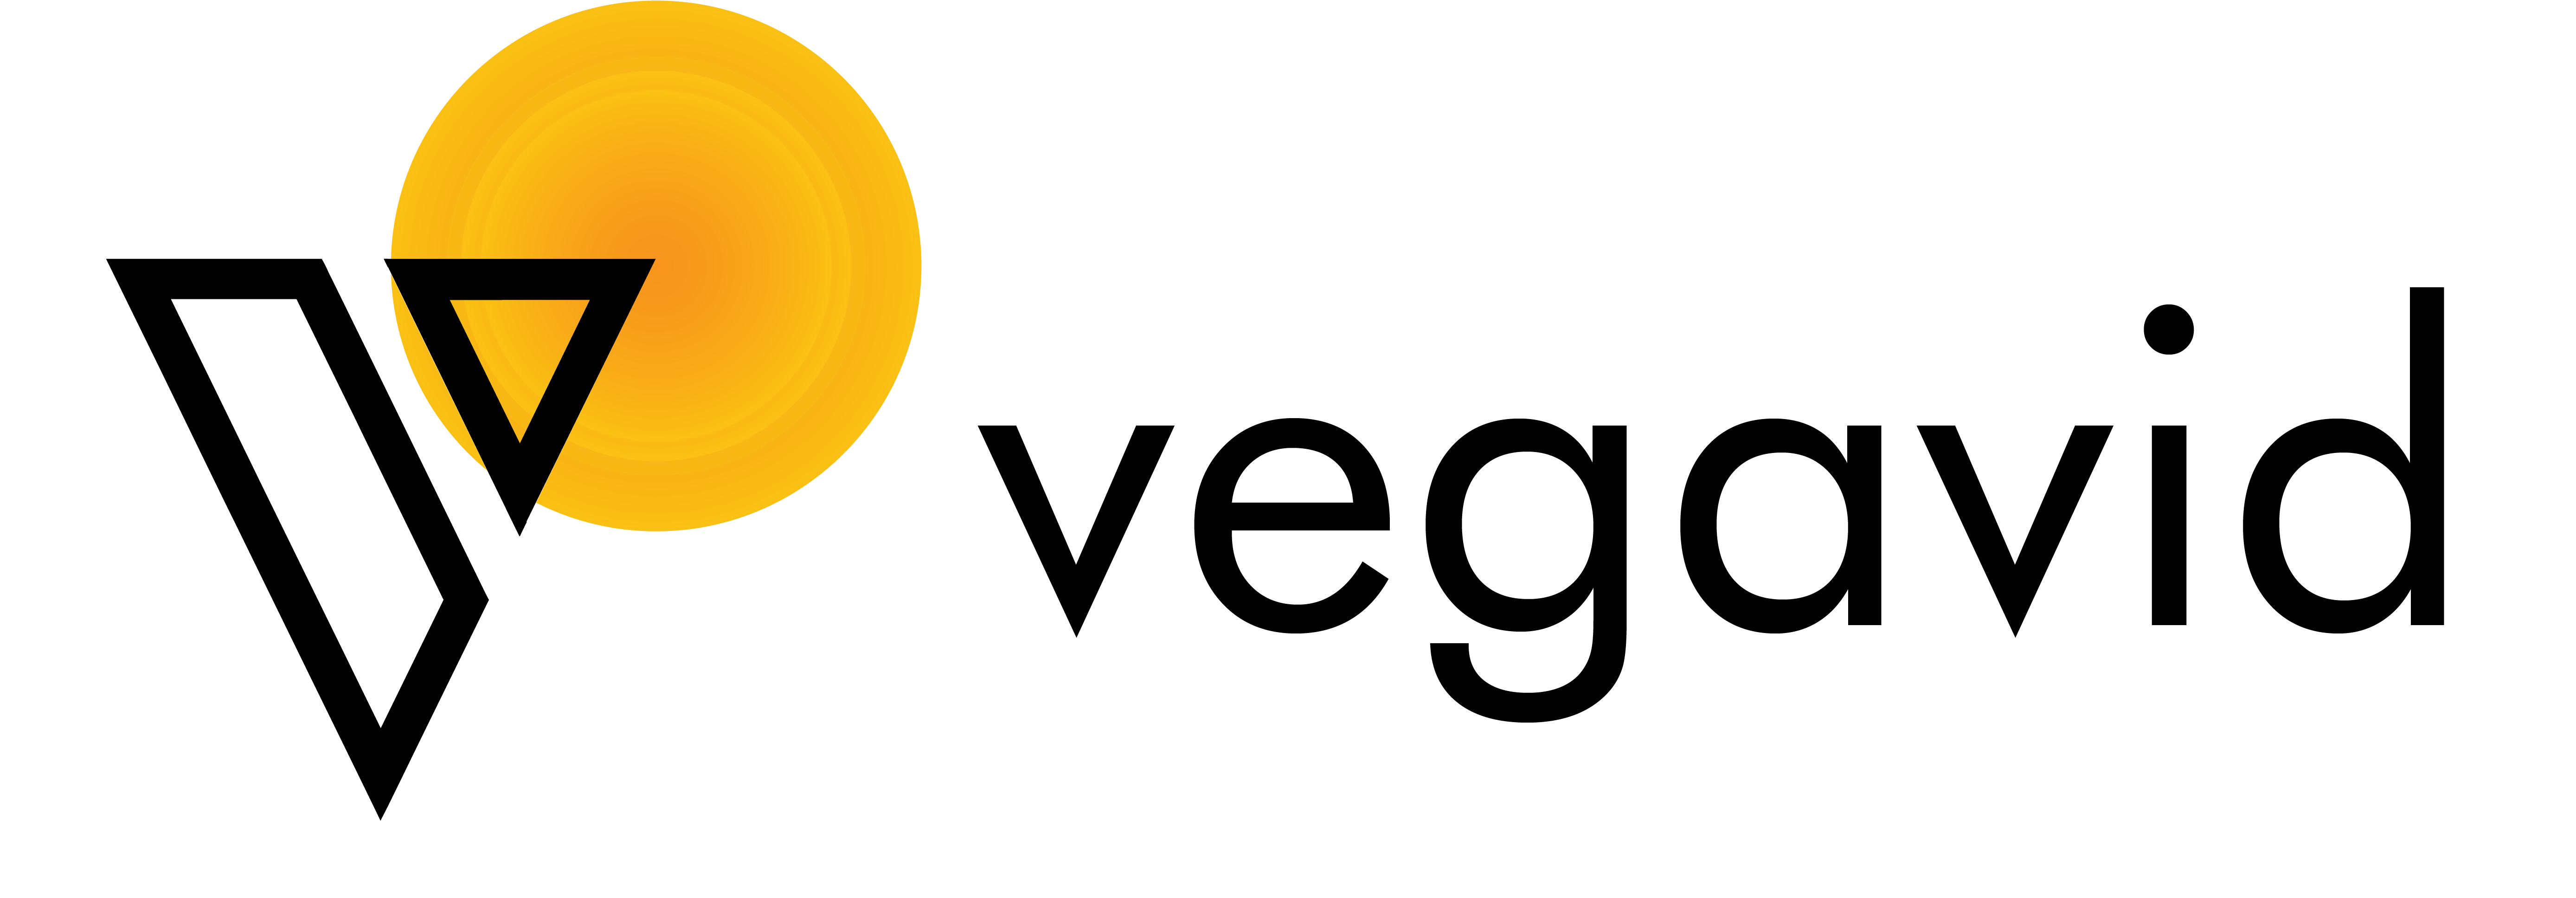 Vegavid Technology